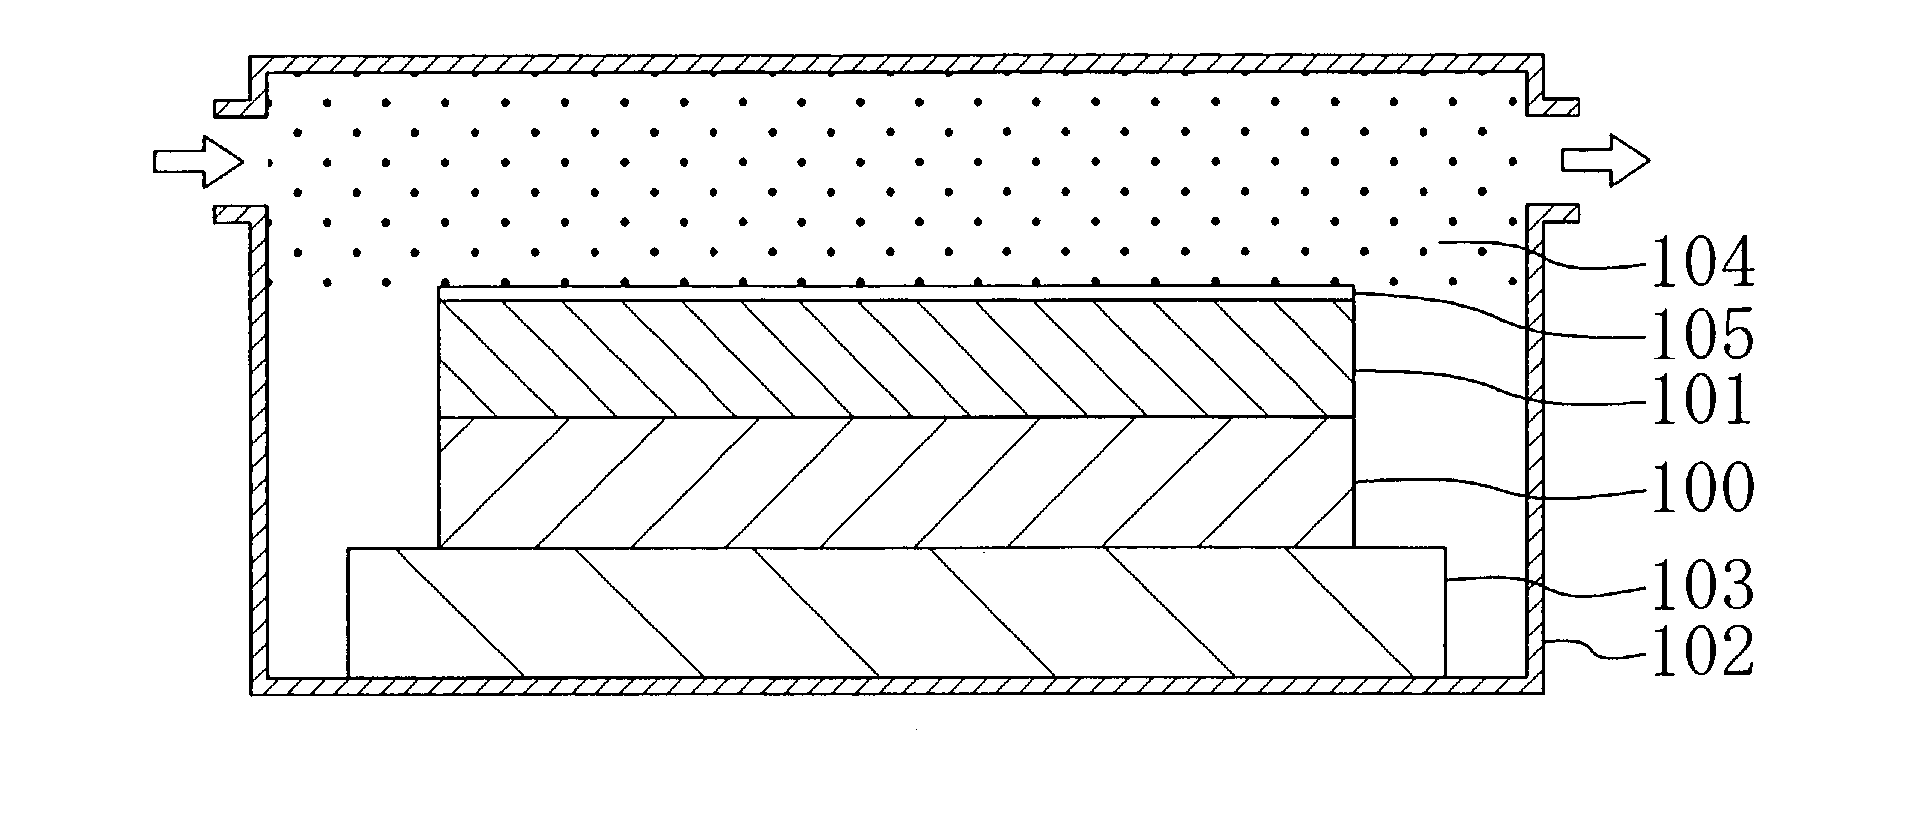 Pattern formation method